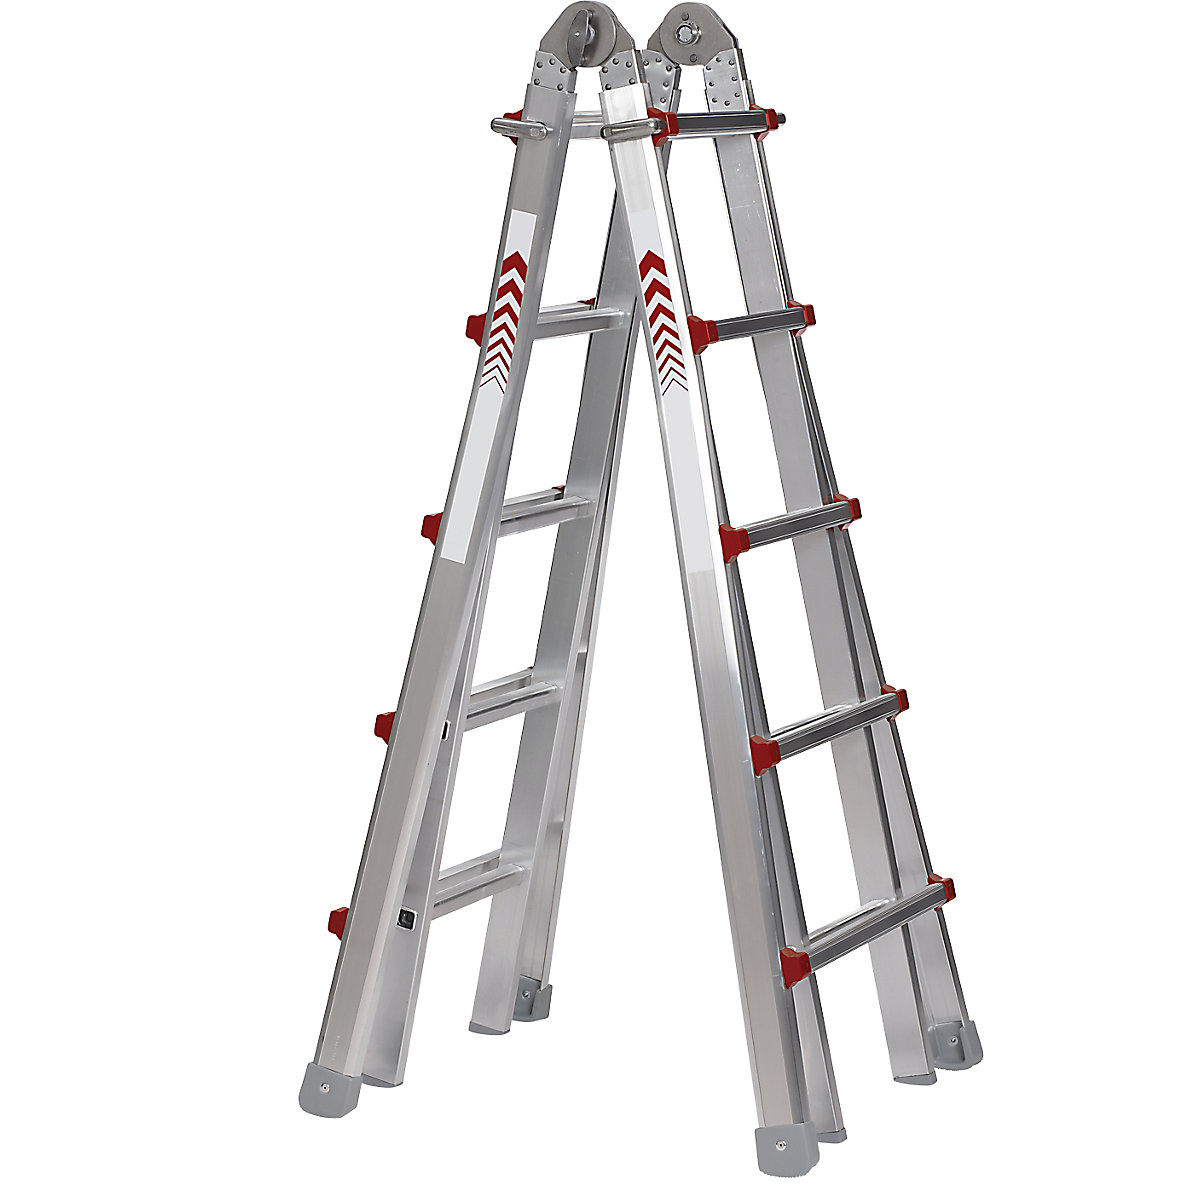 Telescopische multifunctionele ladder, bok-, aanleg-, opsteek- en trapladder in één, 4 x 5 sporten-16